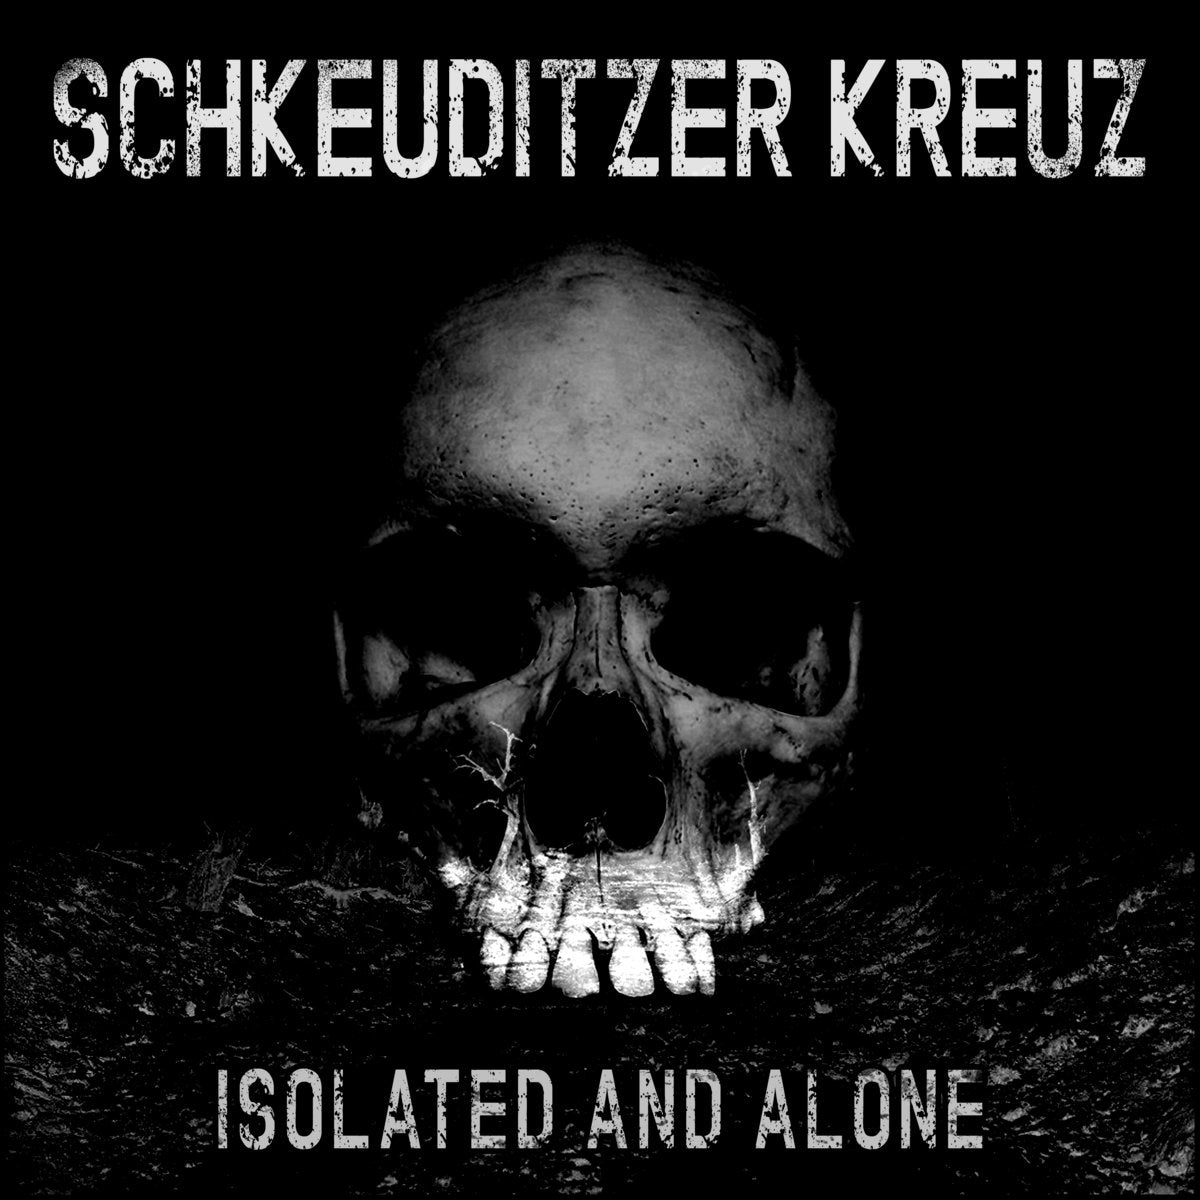 SCHKEUITZER KREUZ - "ISOLATED AND ALONE" LP